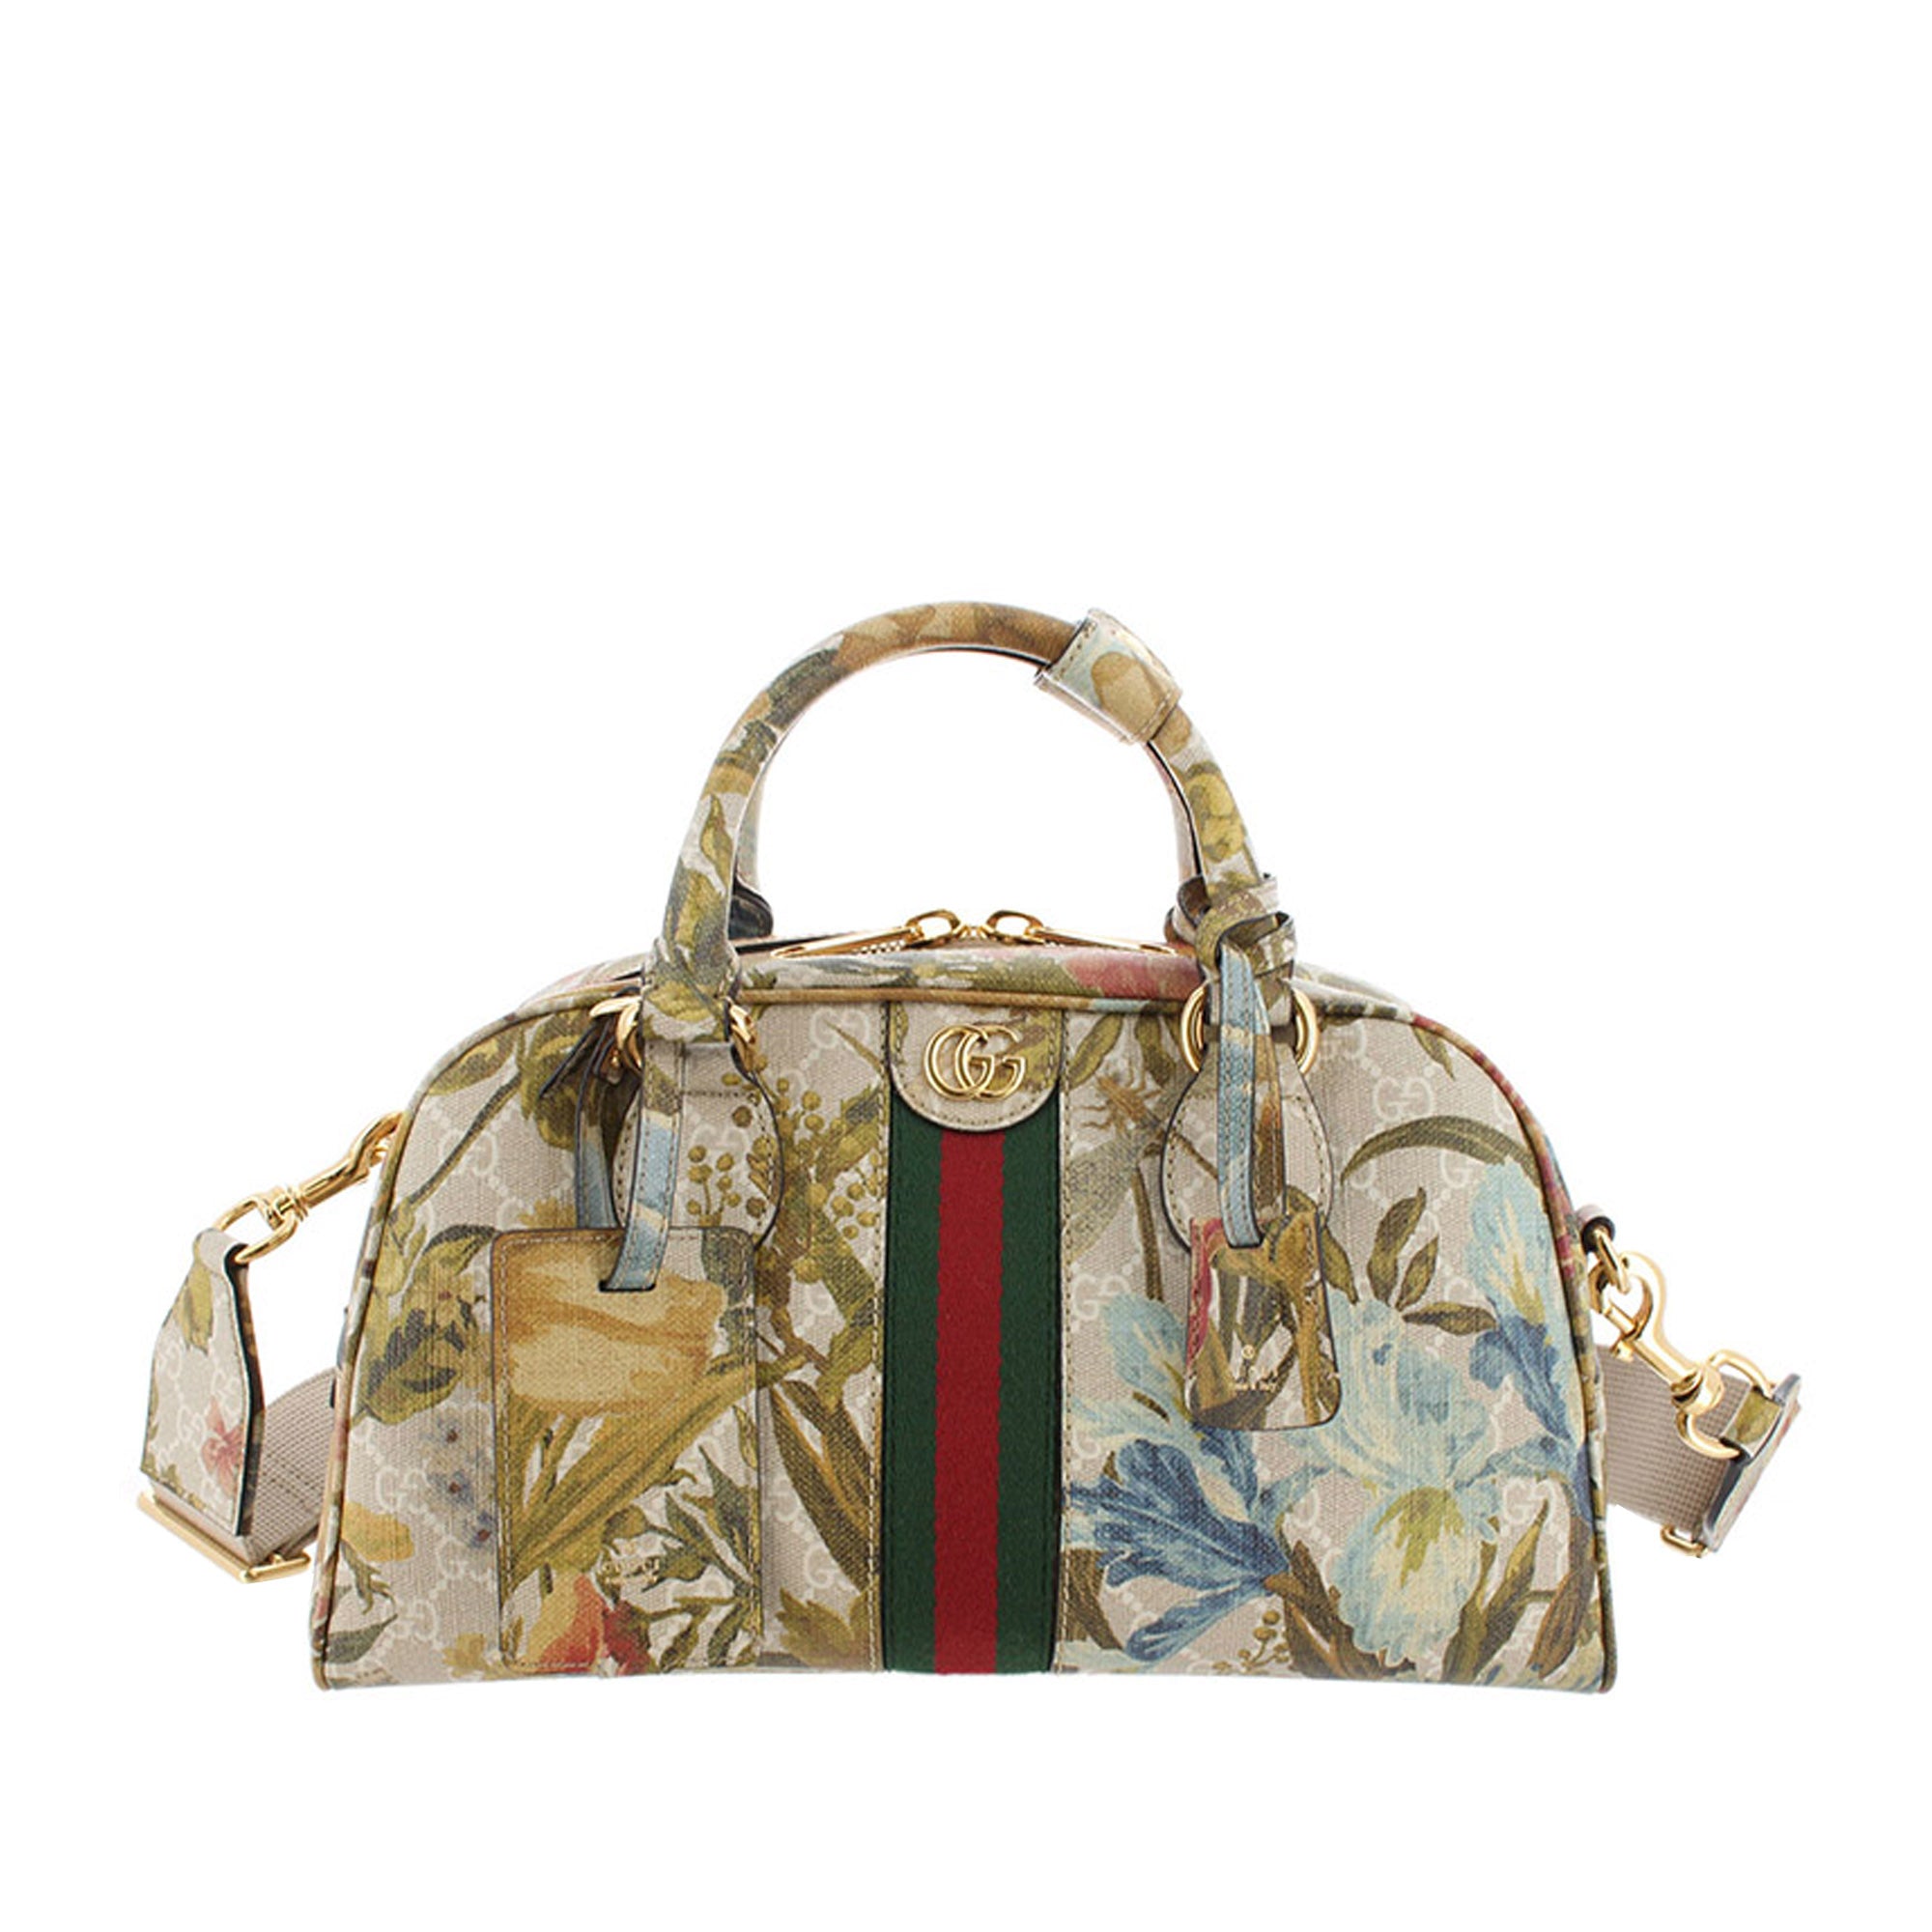 Gucci Ophidia Womens Handbags, Multi